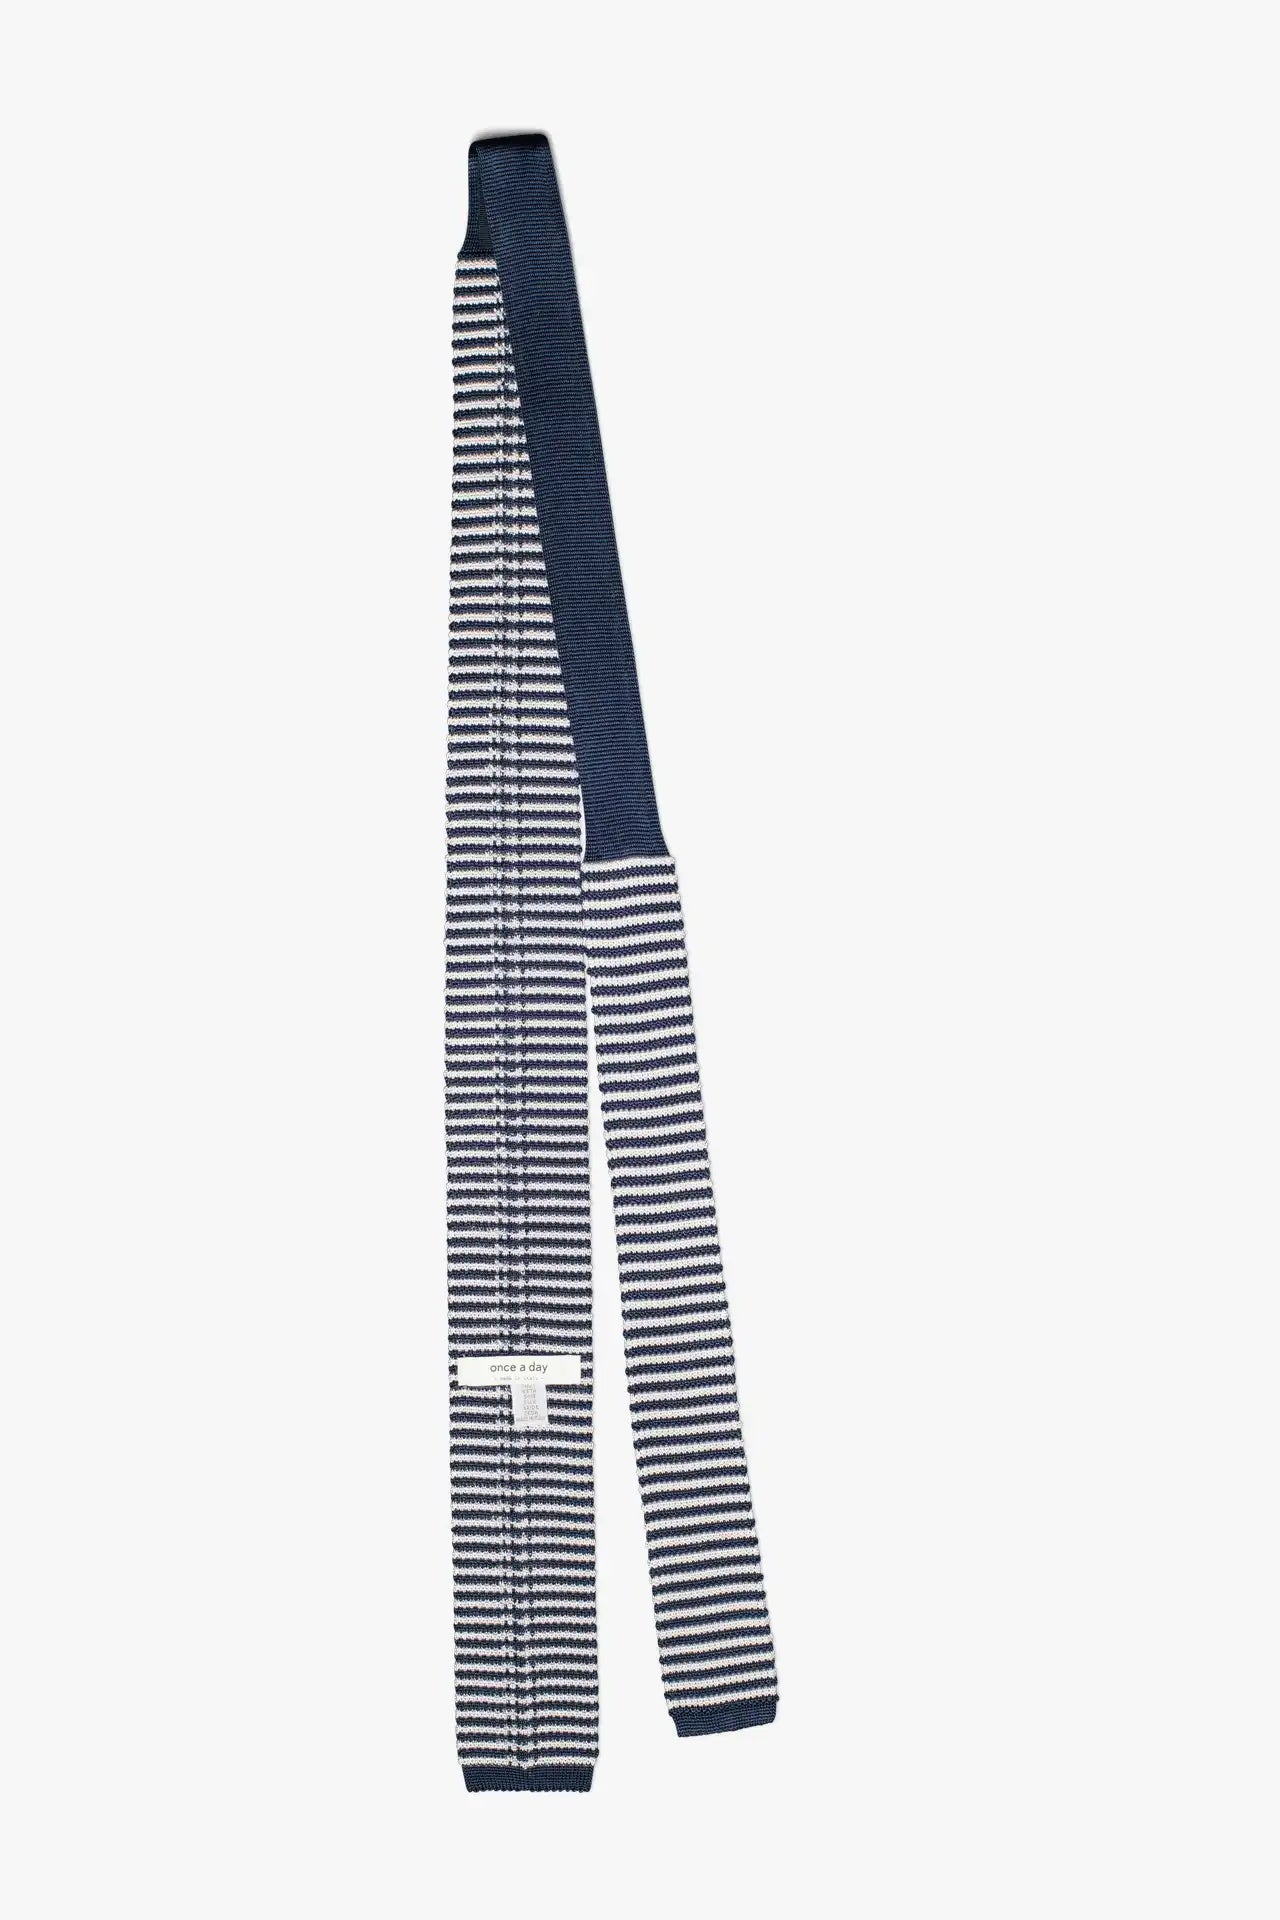 The Stripe Tie - Navy Blue